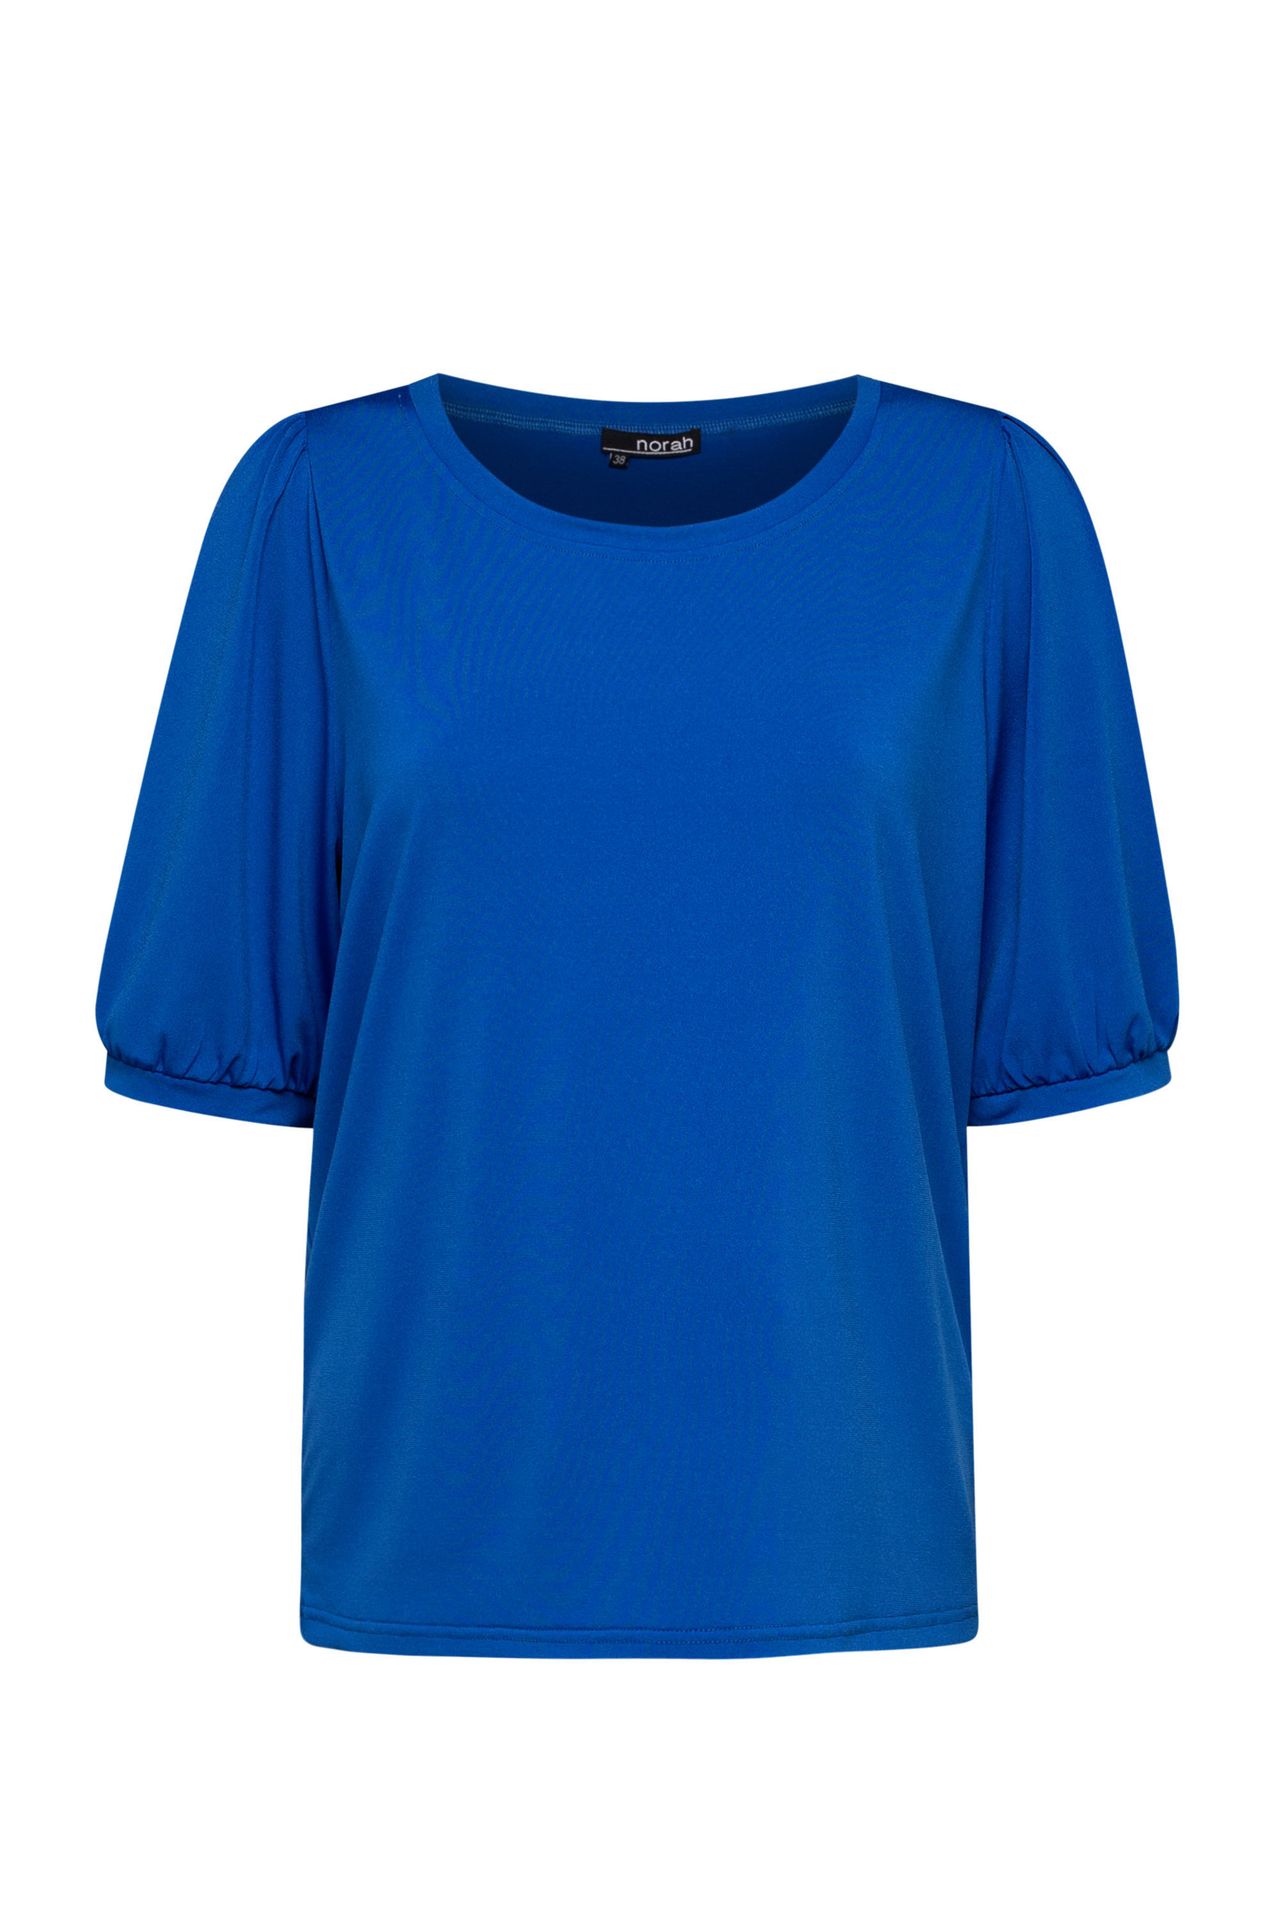 Norah Shirt blauw cobalt 212851-468